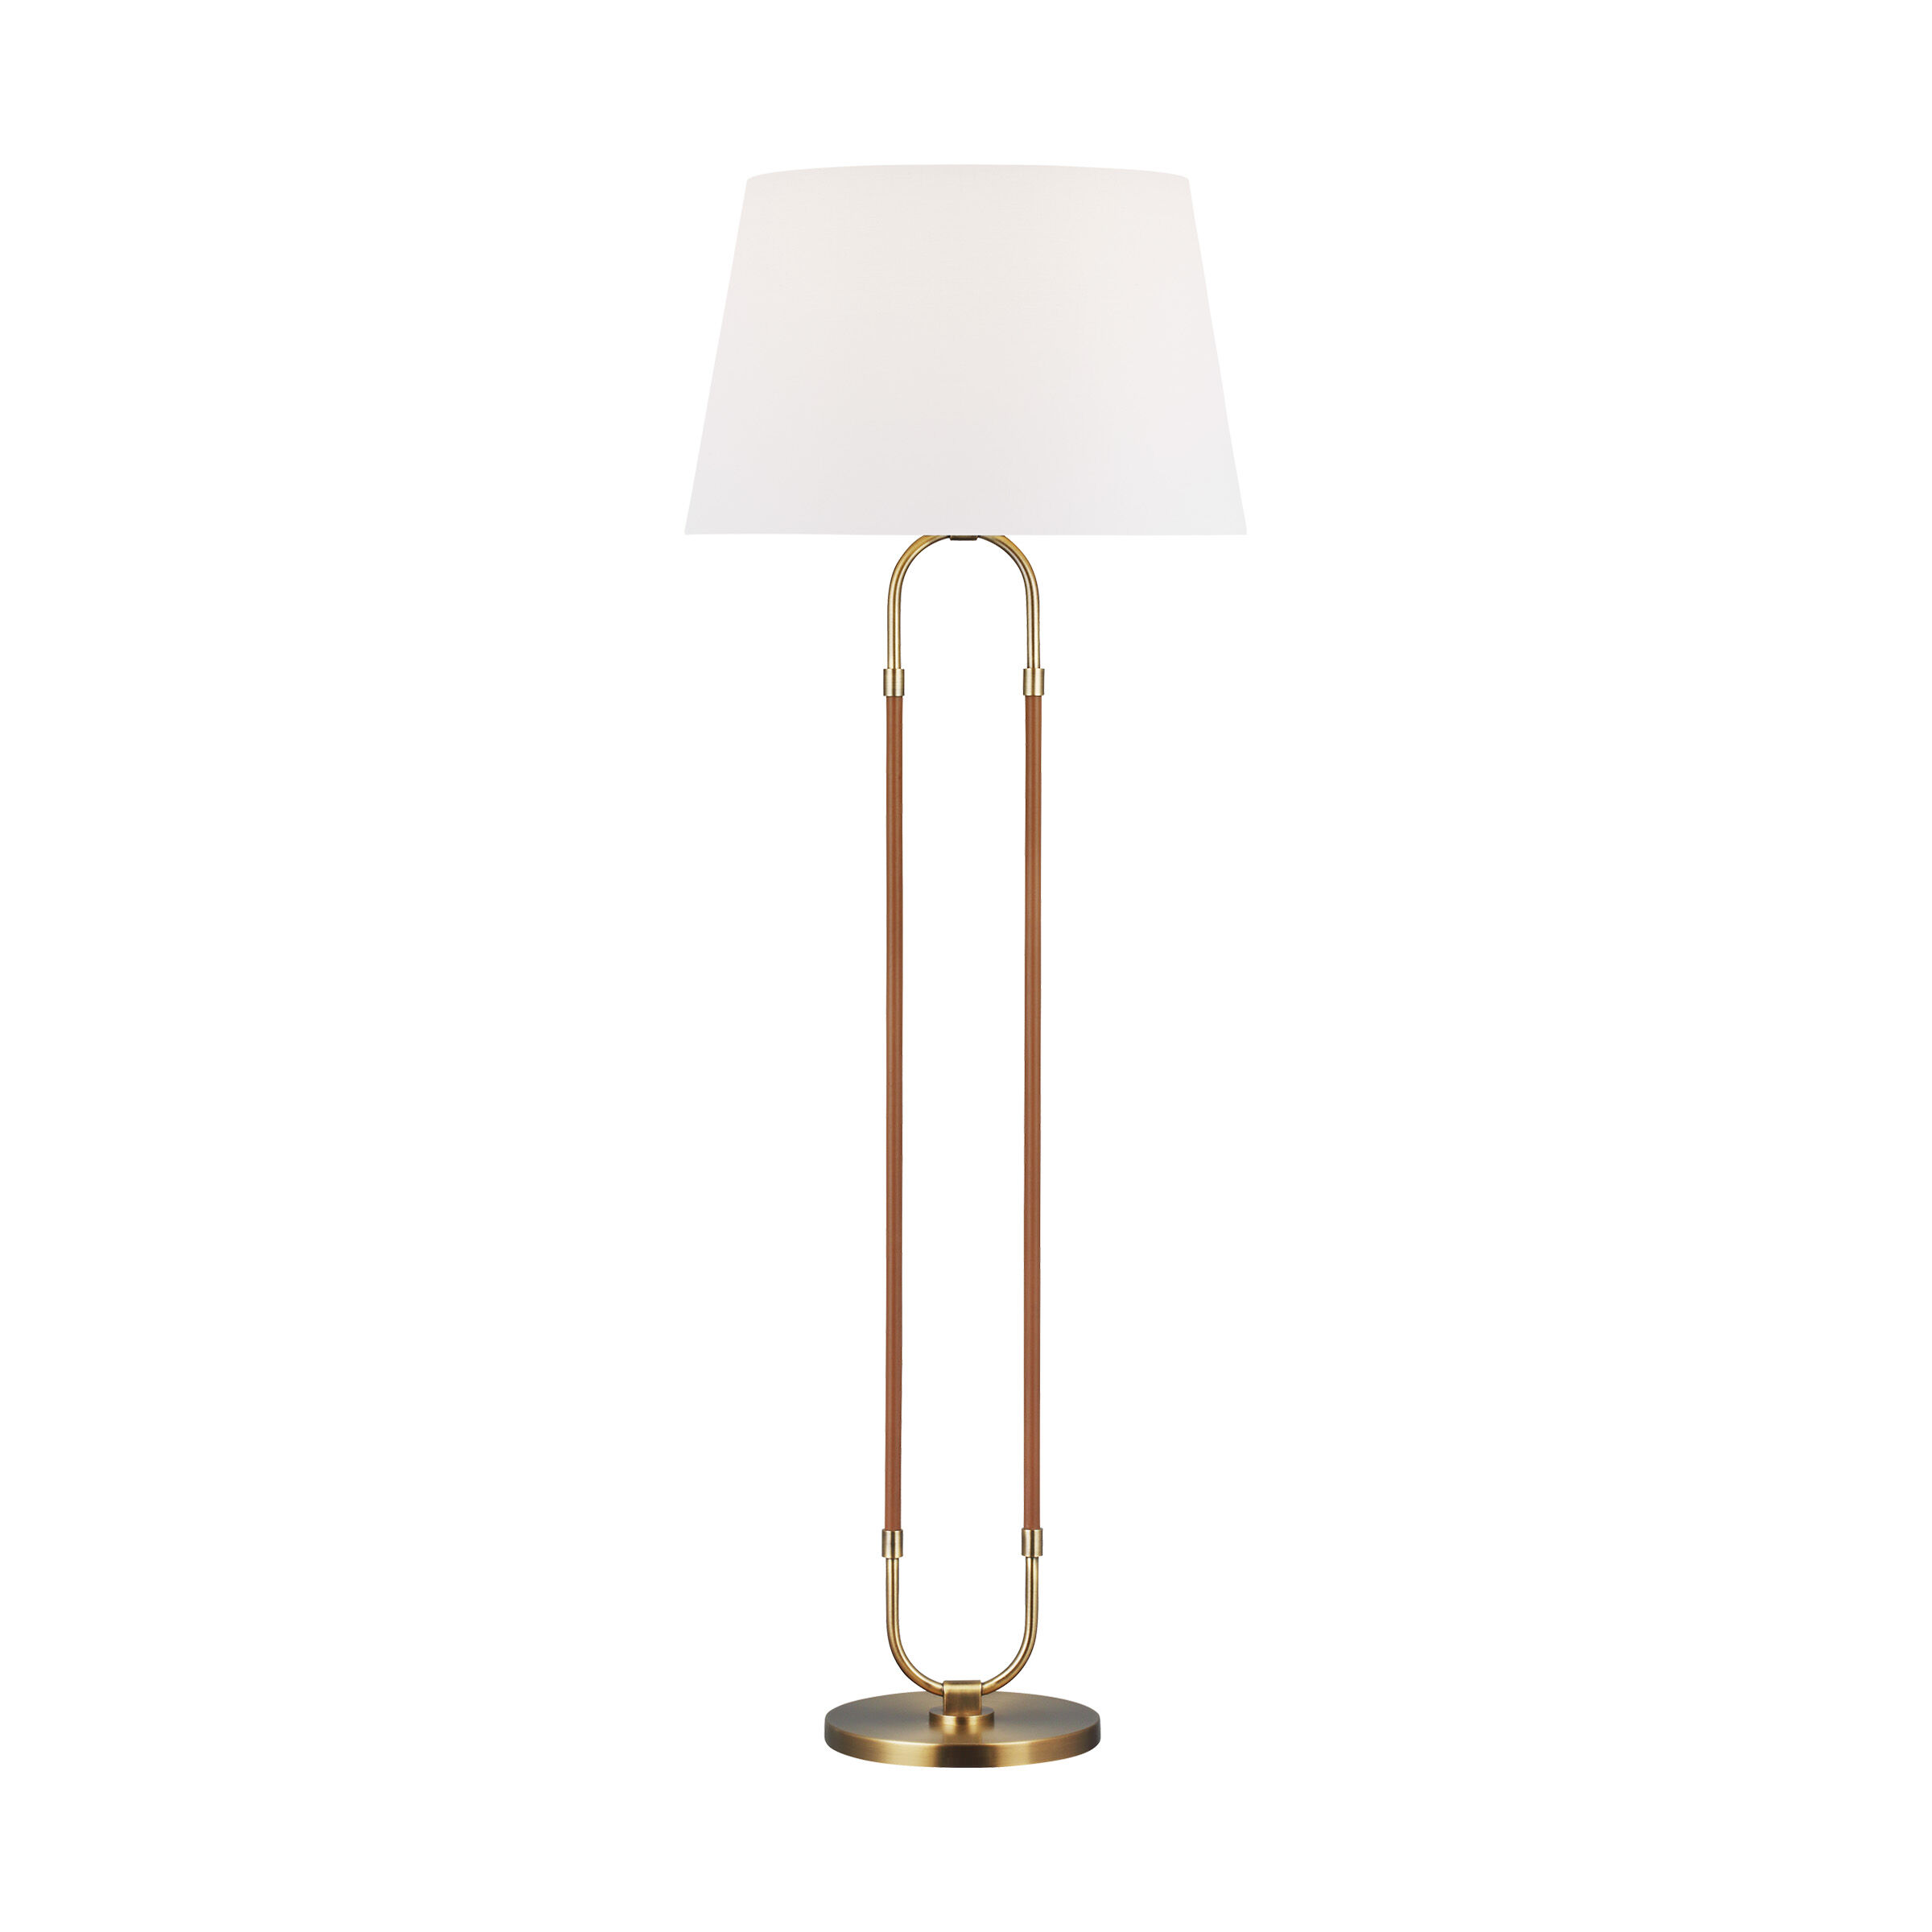 Visual Comfort Studio Monroe Floor Lamp in Burnished Brass And